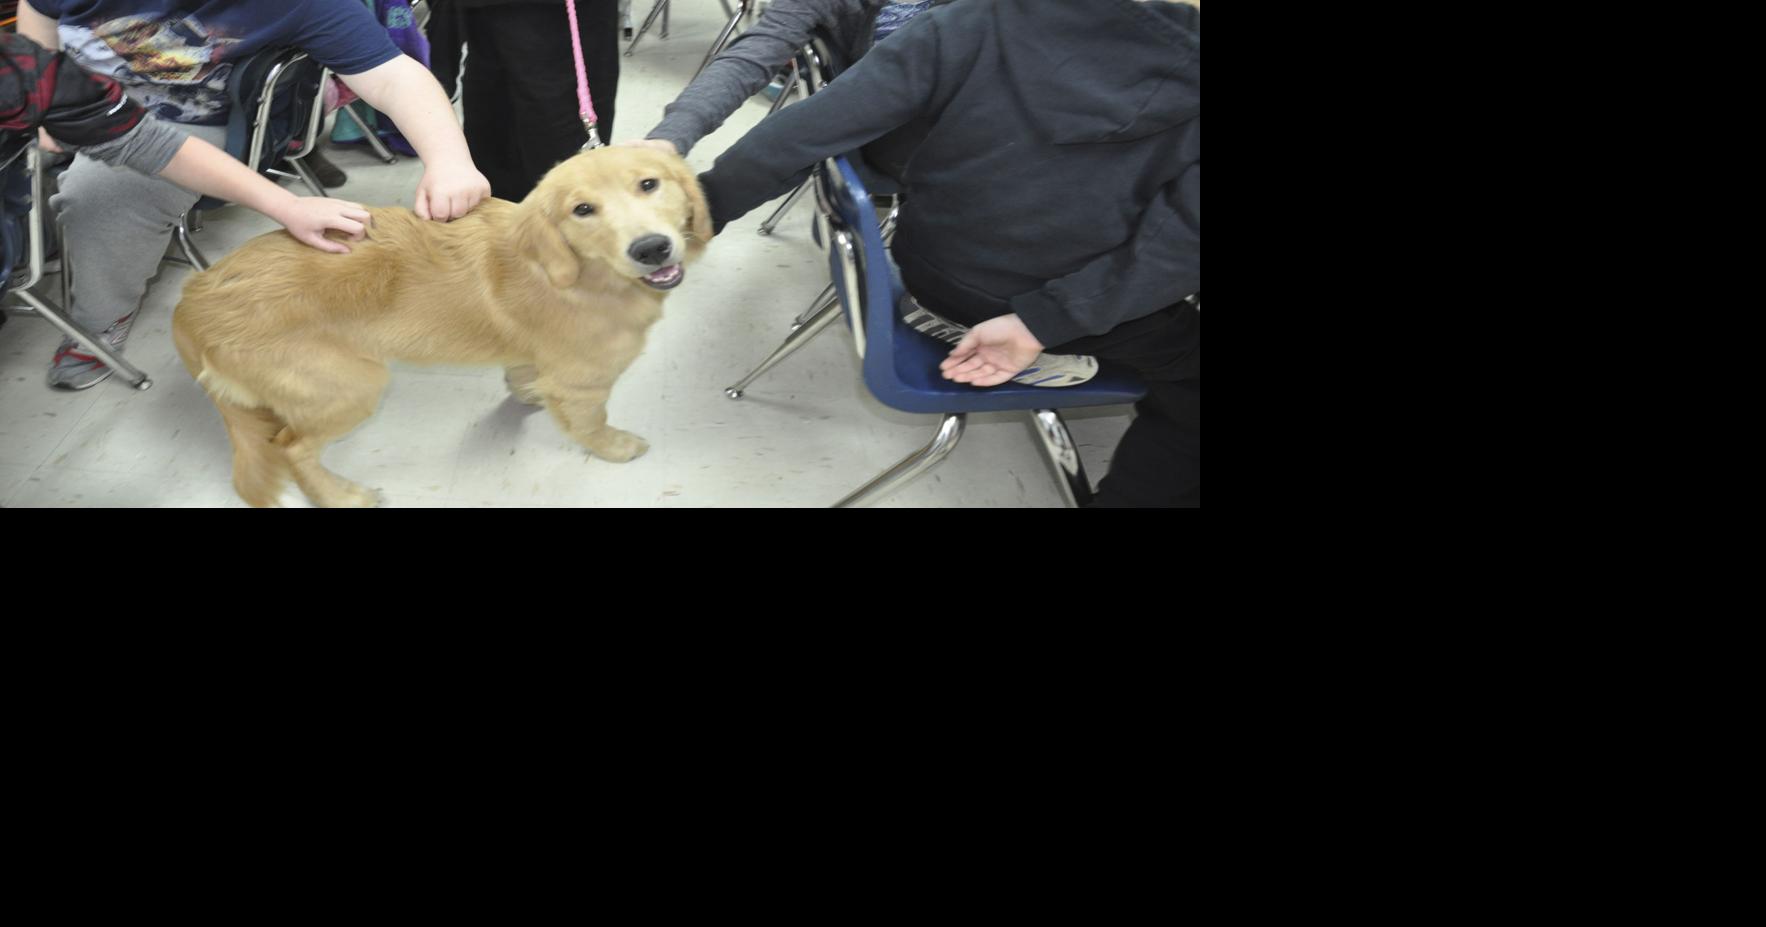 Dog for adoption - Dug, a Golden Retriever Mix in Louisville, KY